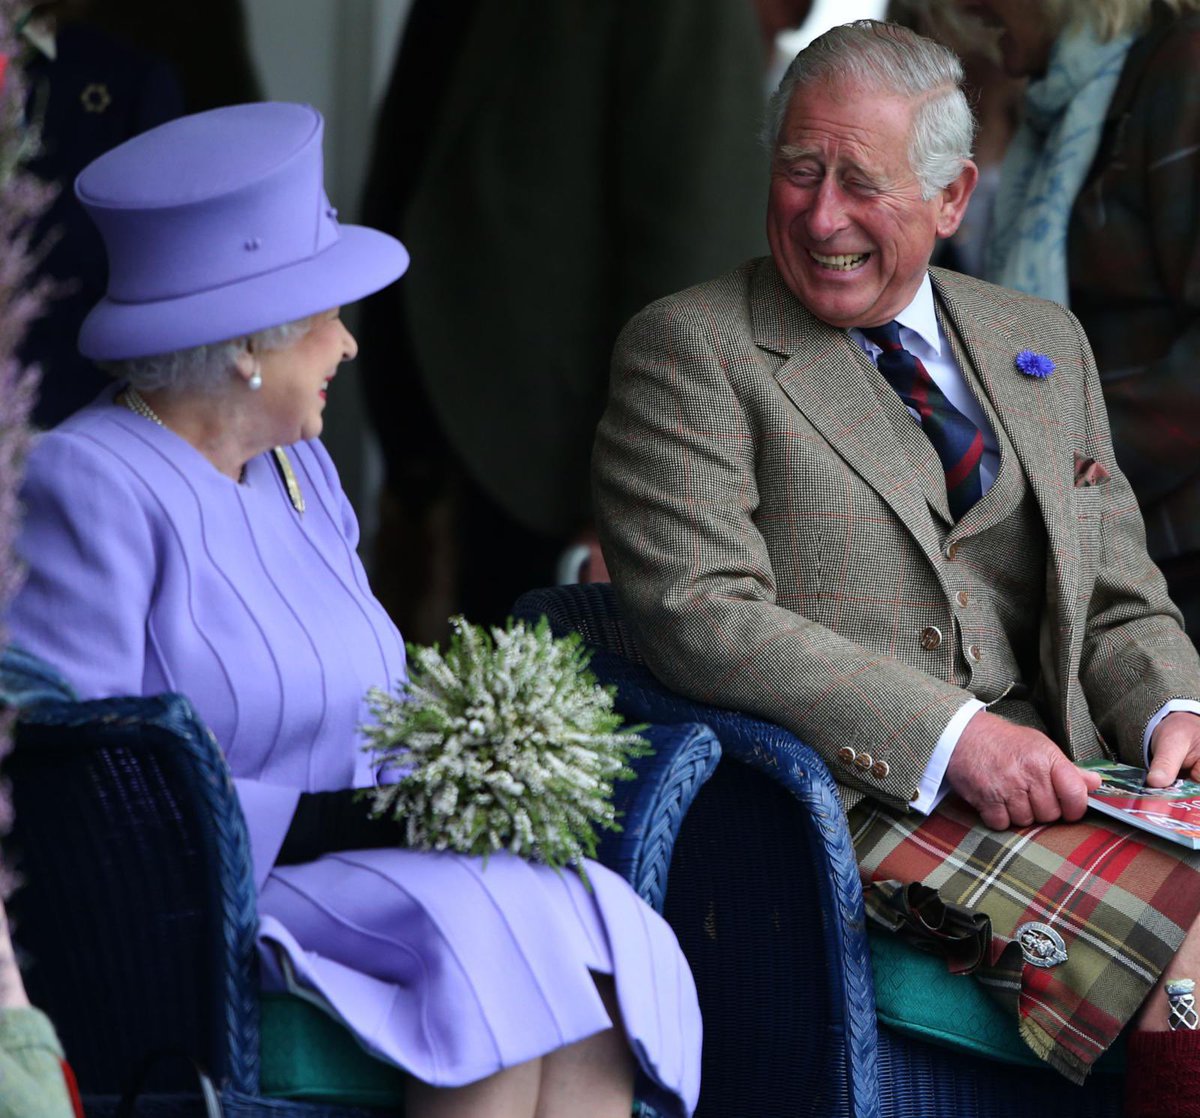 🎈🎂 Wishing The Prince of Wales a very happy birthday today! 

#HappyBirthdayHRH